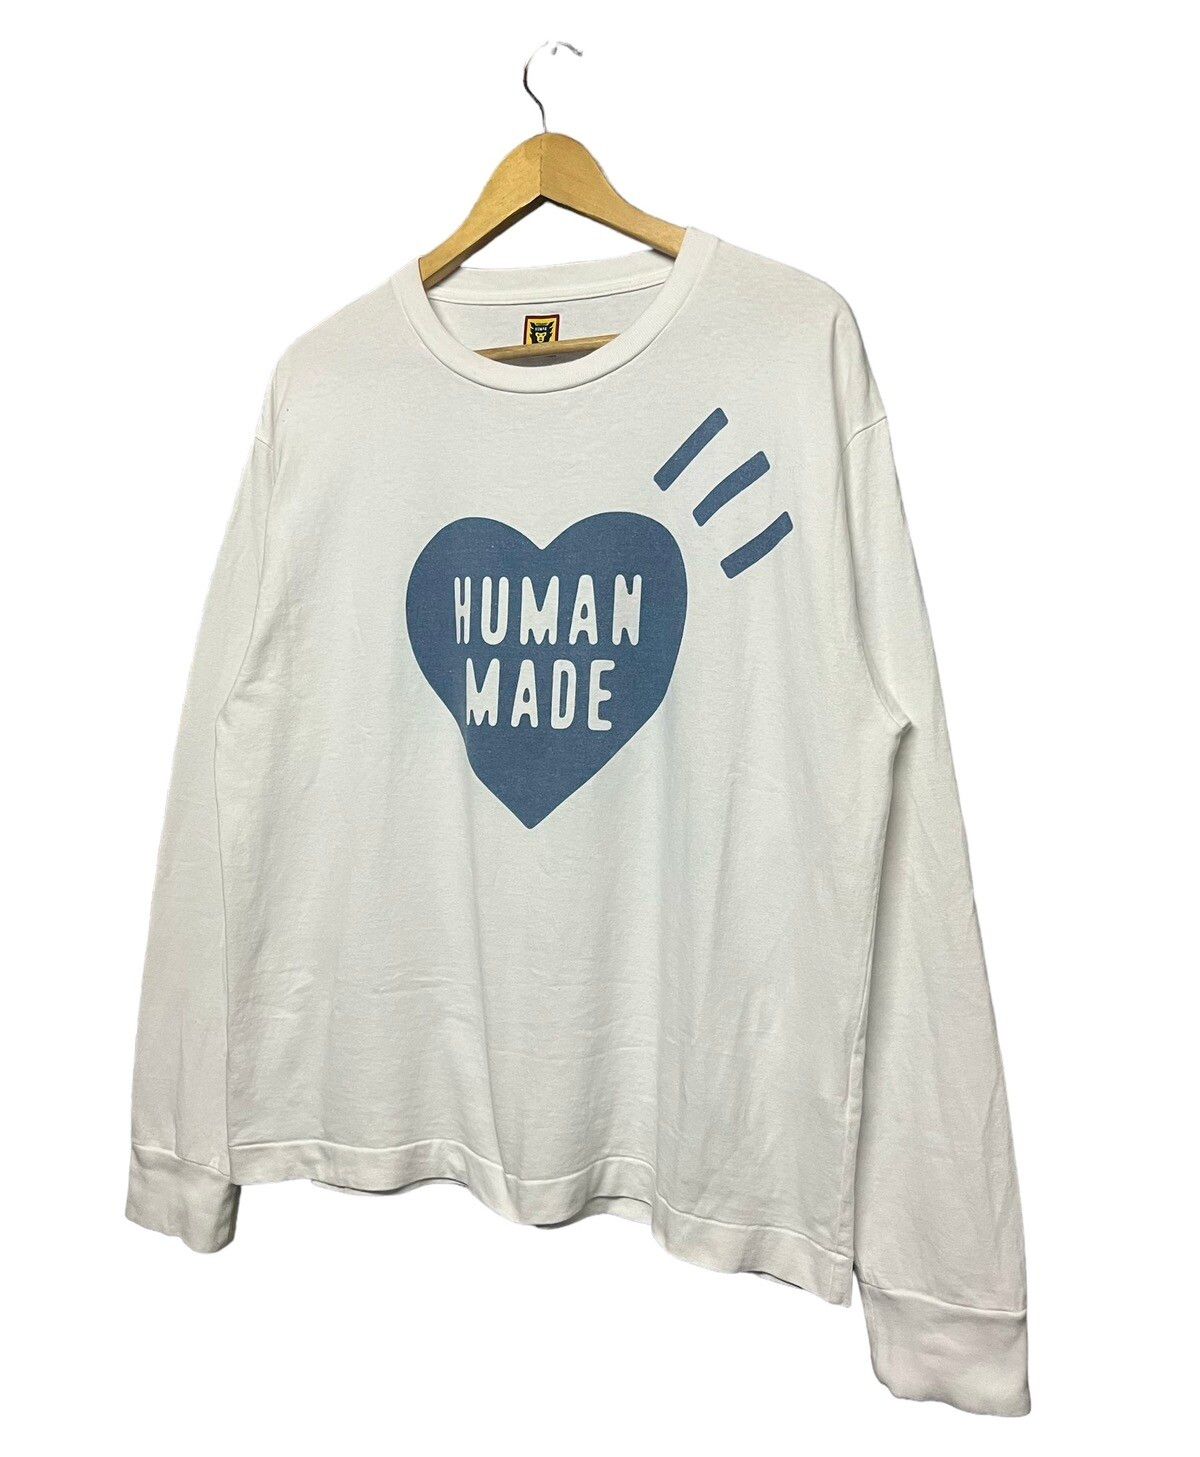 Human Made Og Logo Longsleeve Shirt - 4